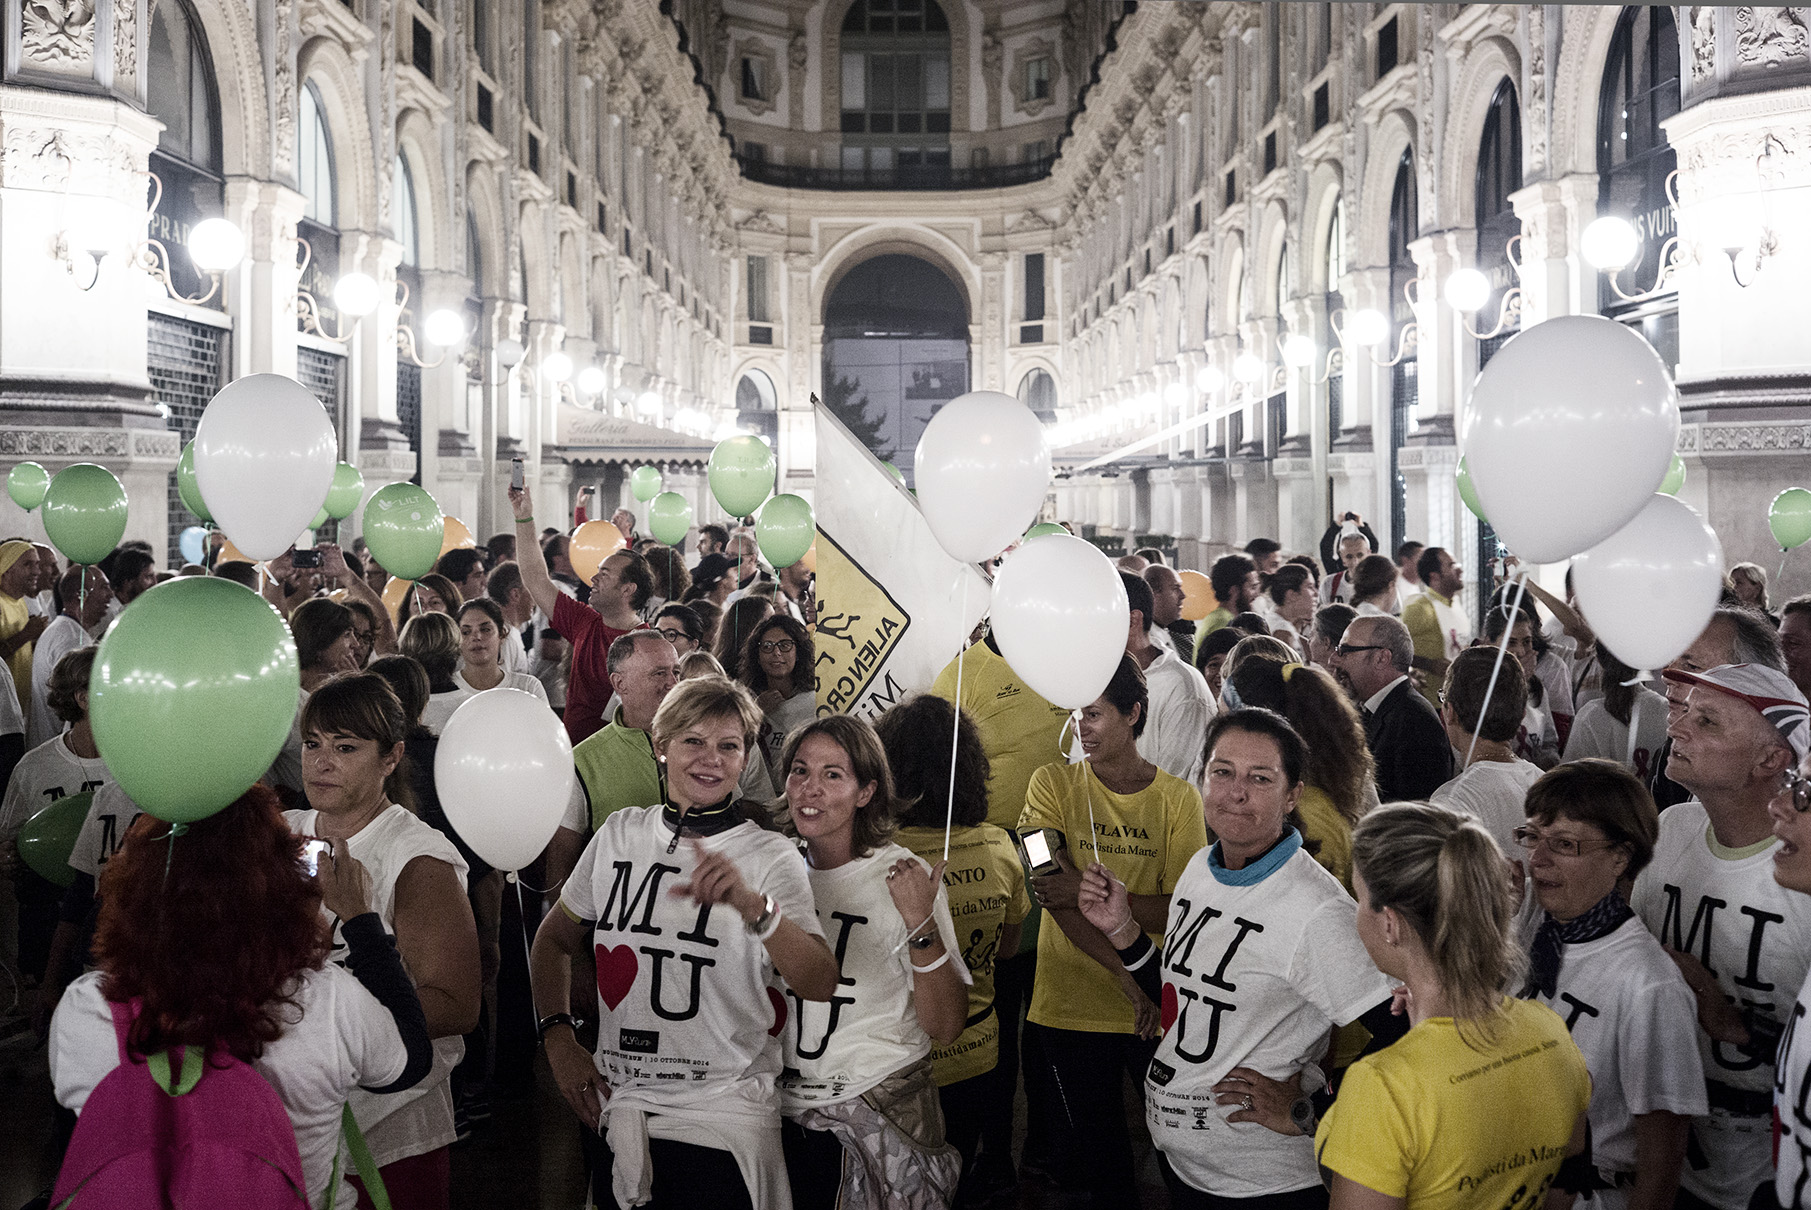 Milano Loves You Run 2015-LILT Milano Monza Brianza